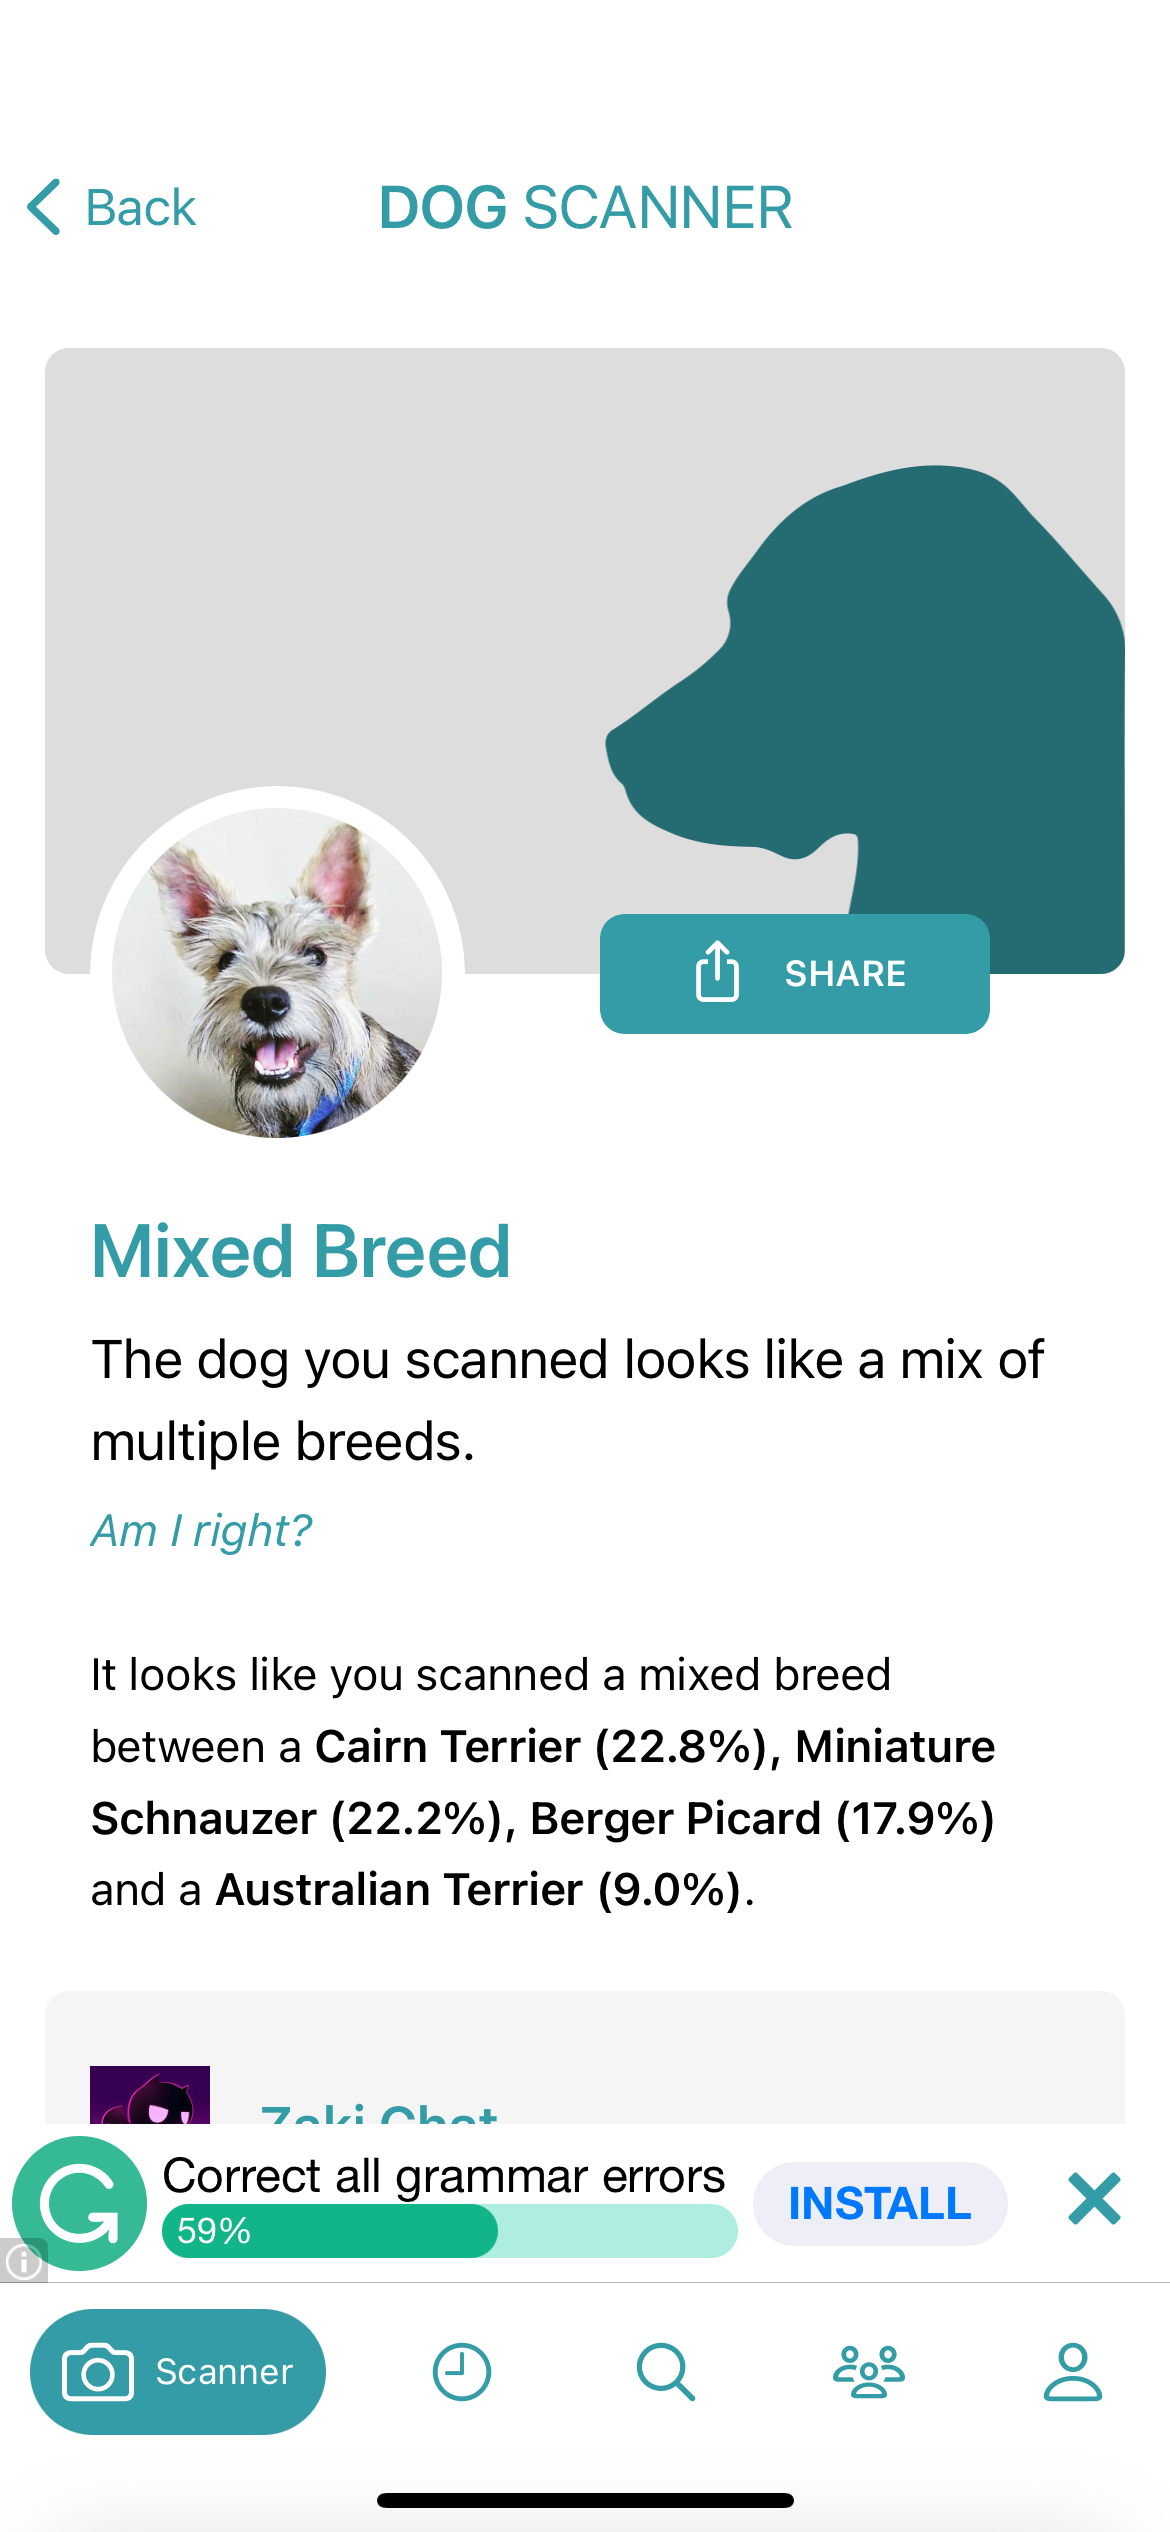 Dog Scanner mixed breed description